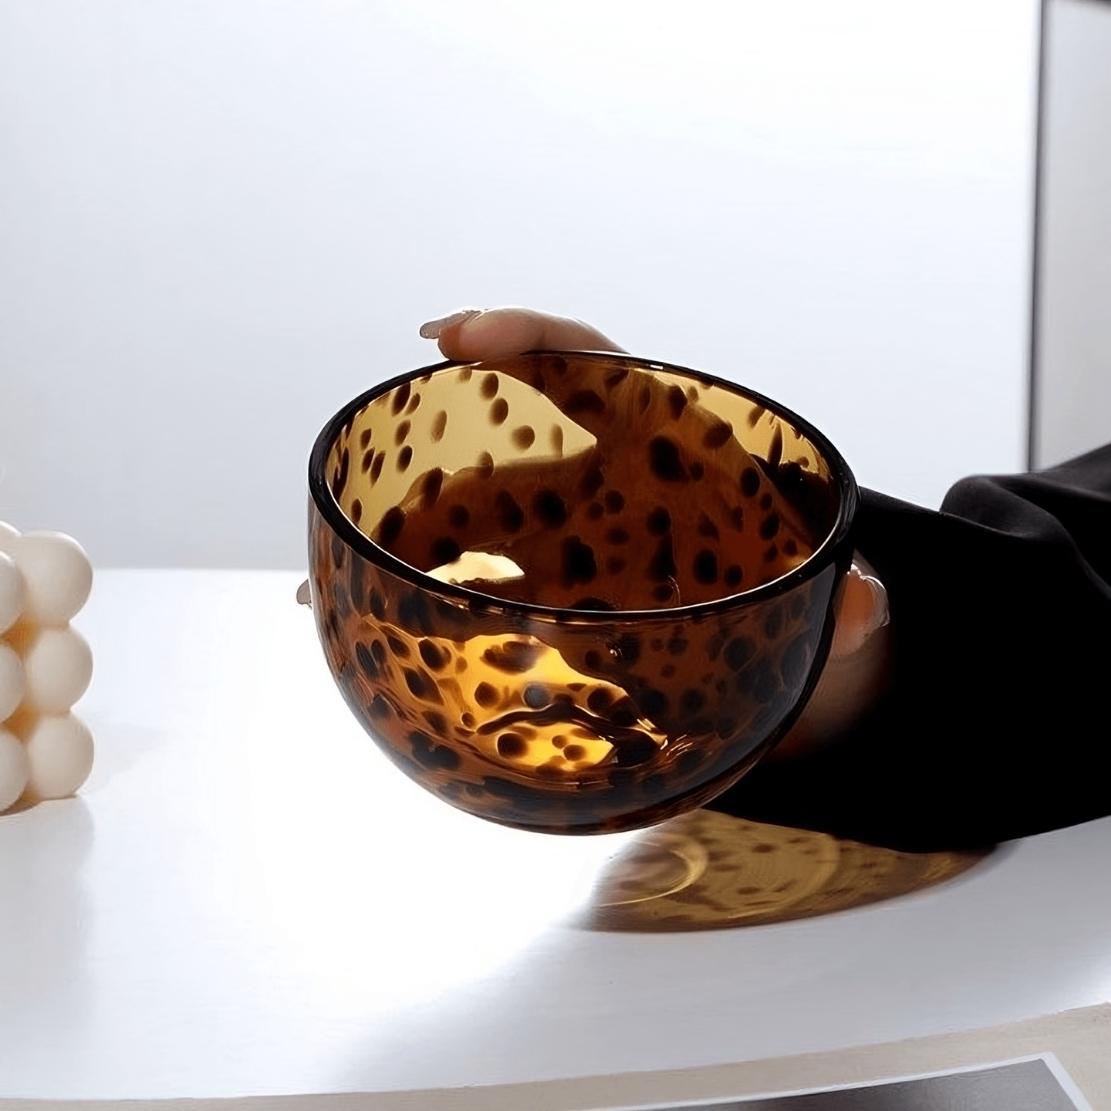 Hand holding brown tortoiseshell glass bowl